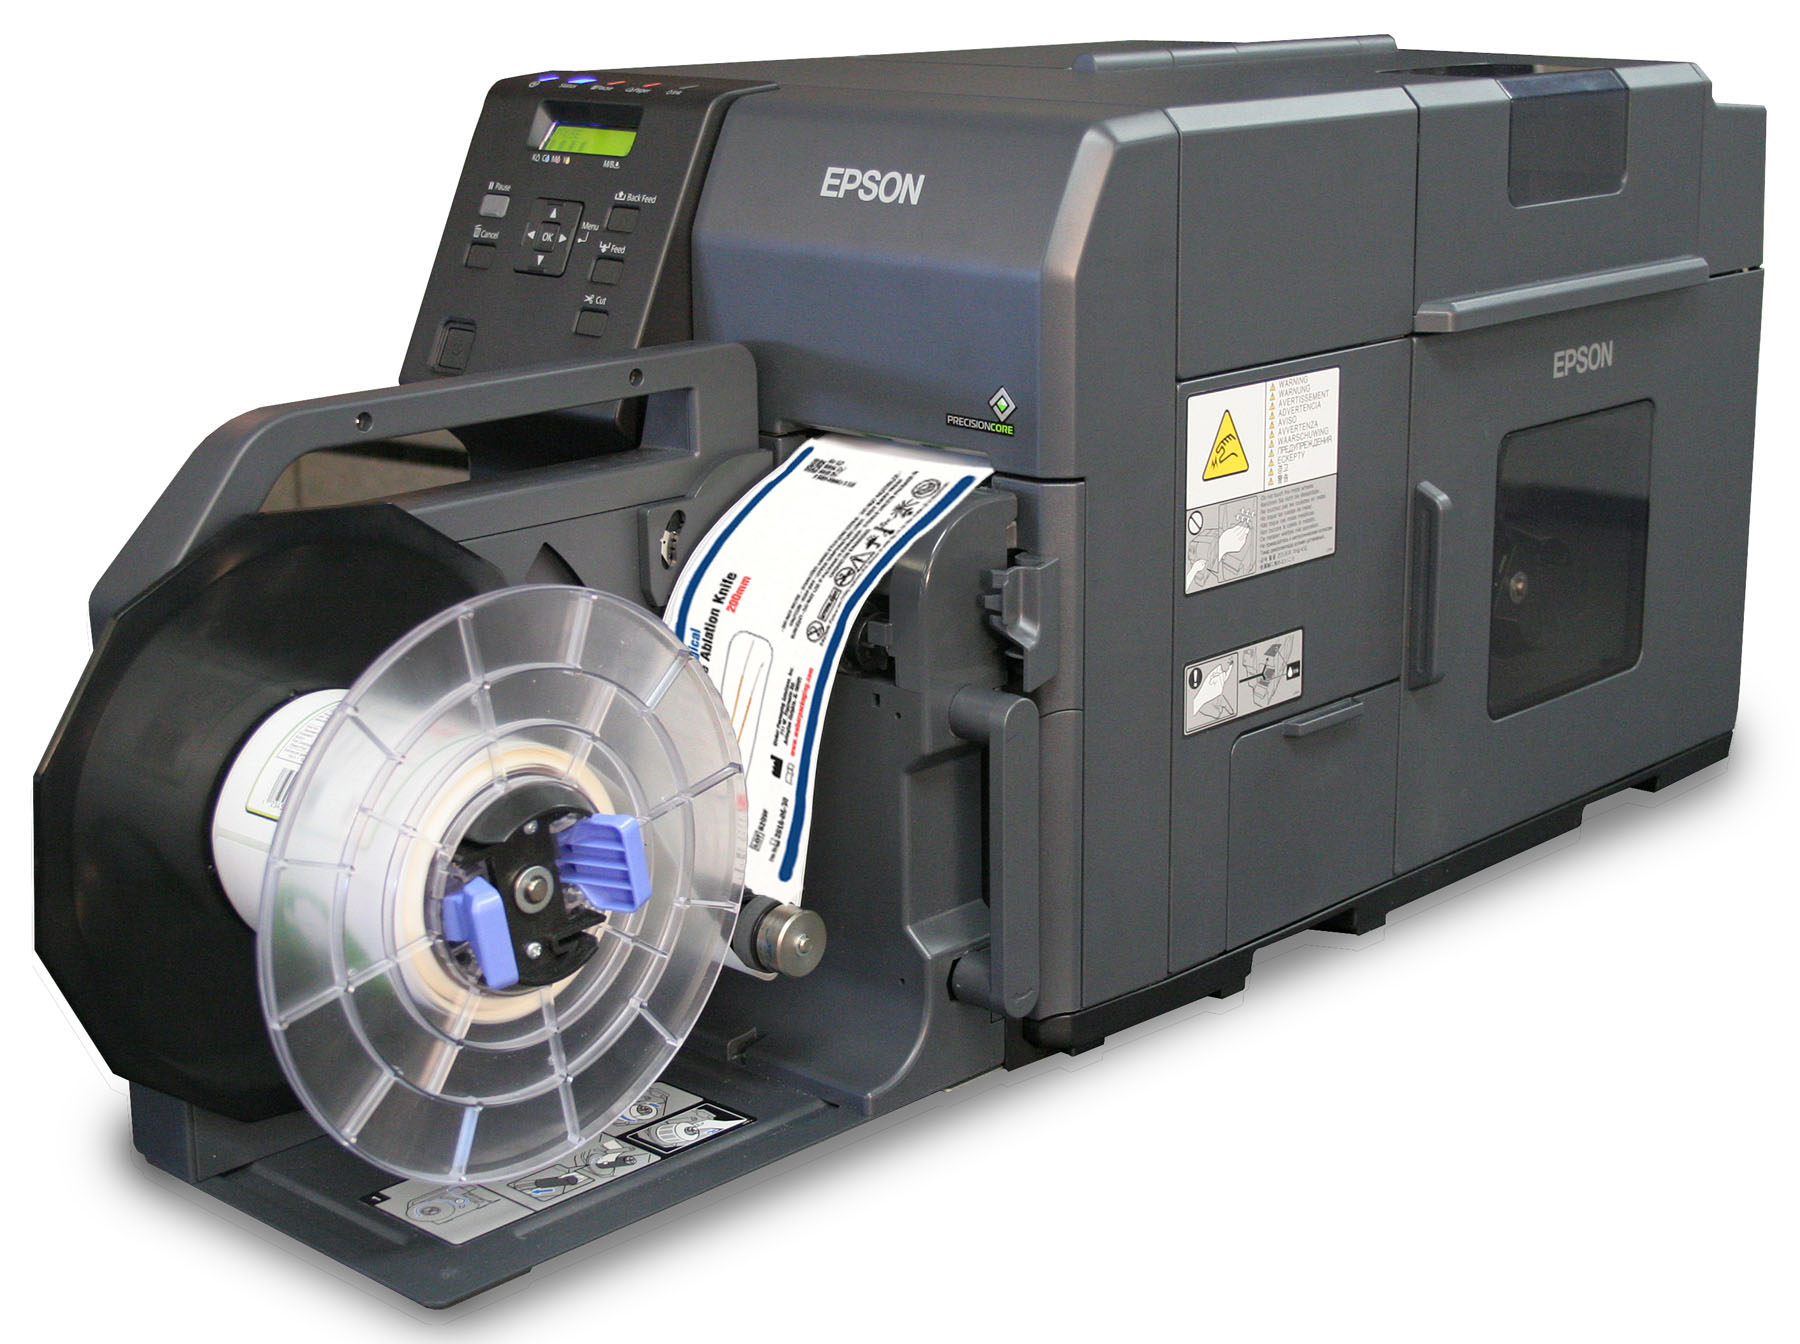 Epson C7500 high speed label printer